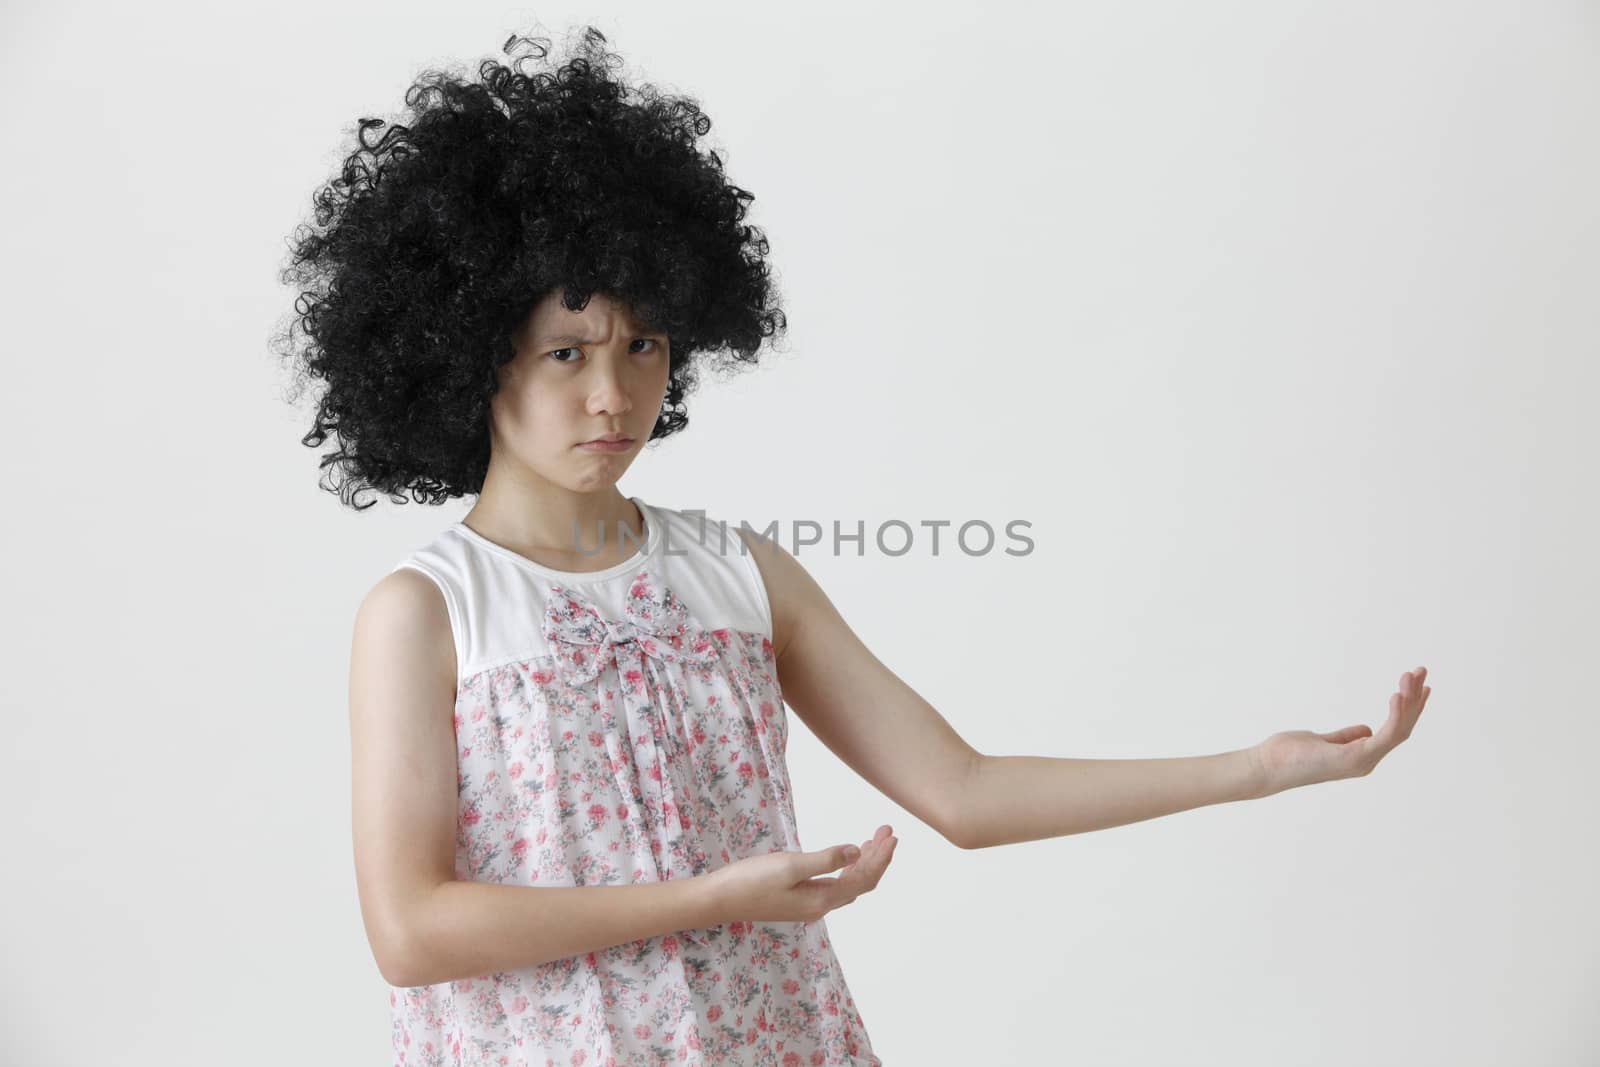 chinese girl wearing a big black wig